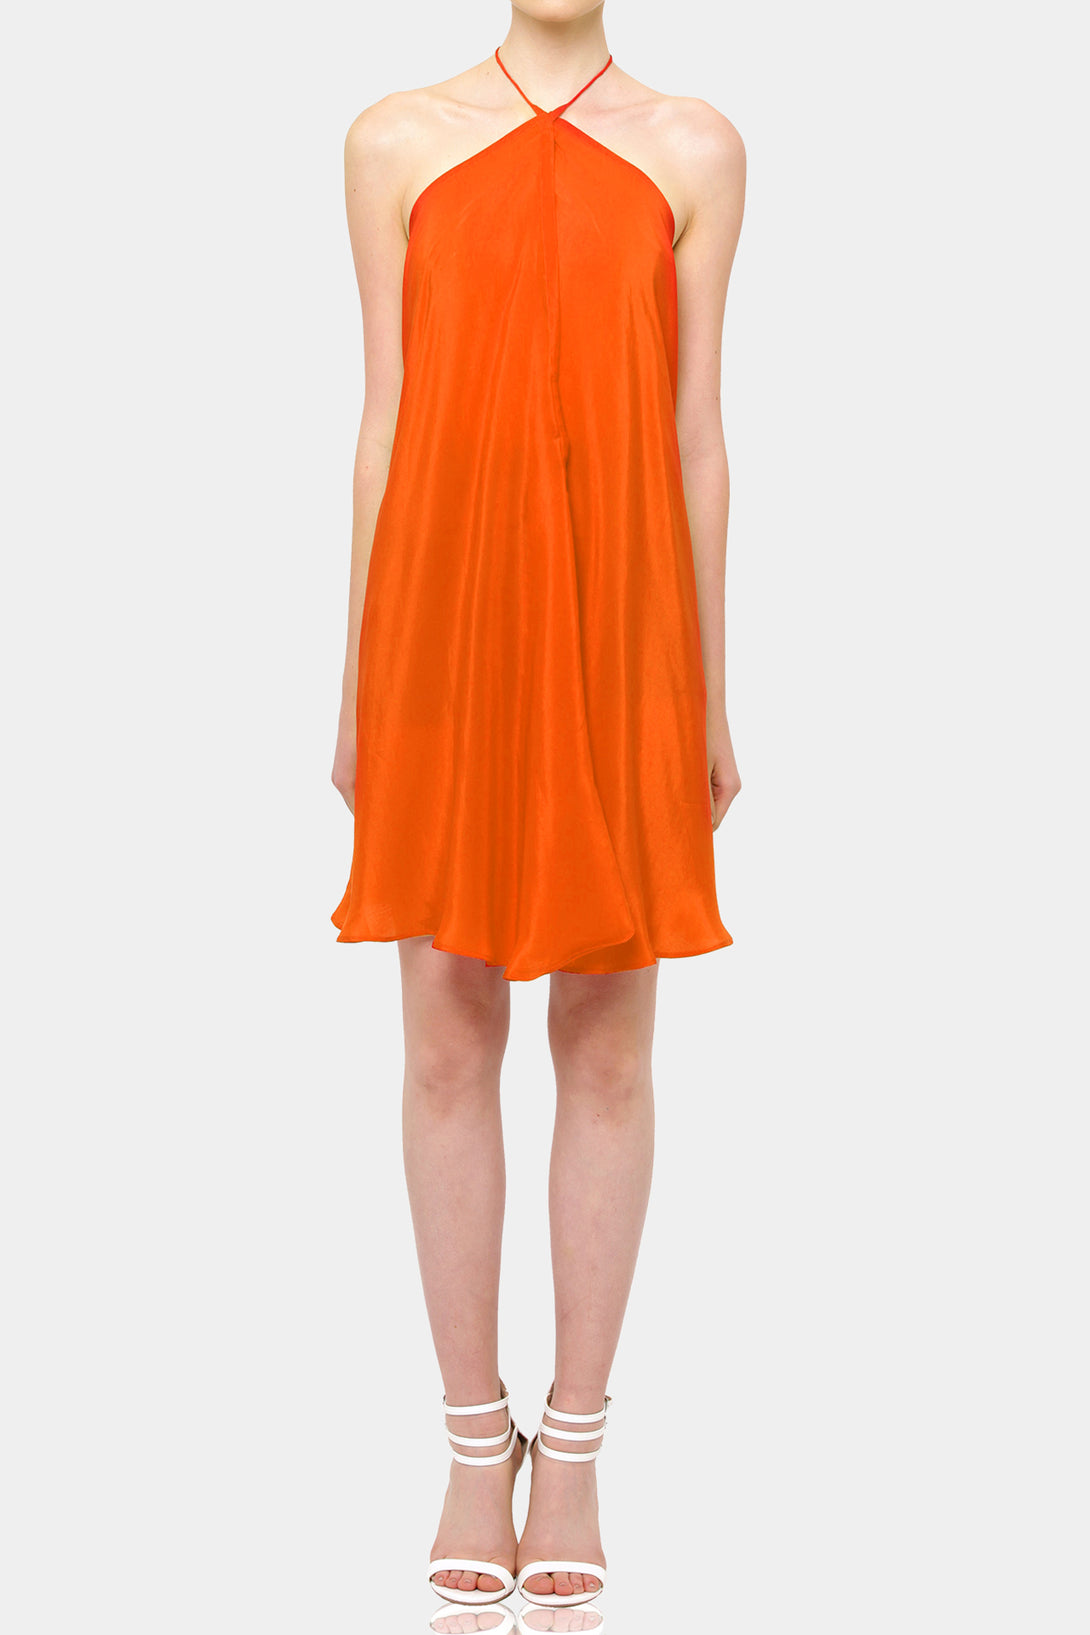   bright orange mini dress, designer mini dress, Shahida Parides, classy mini dress,